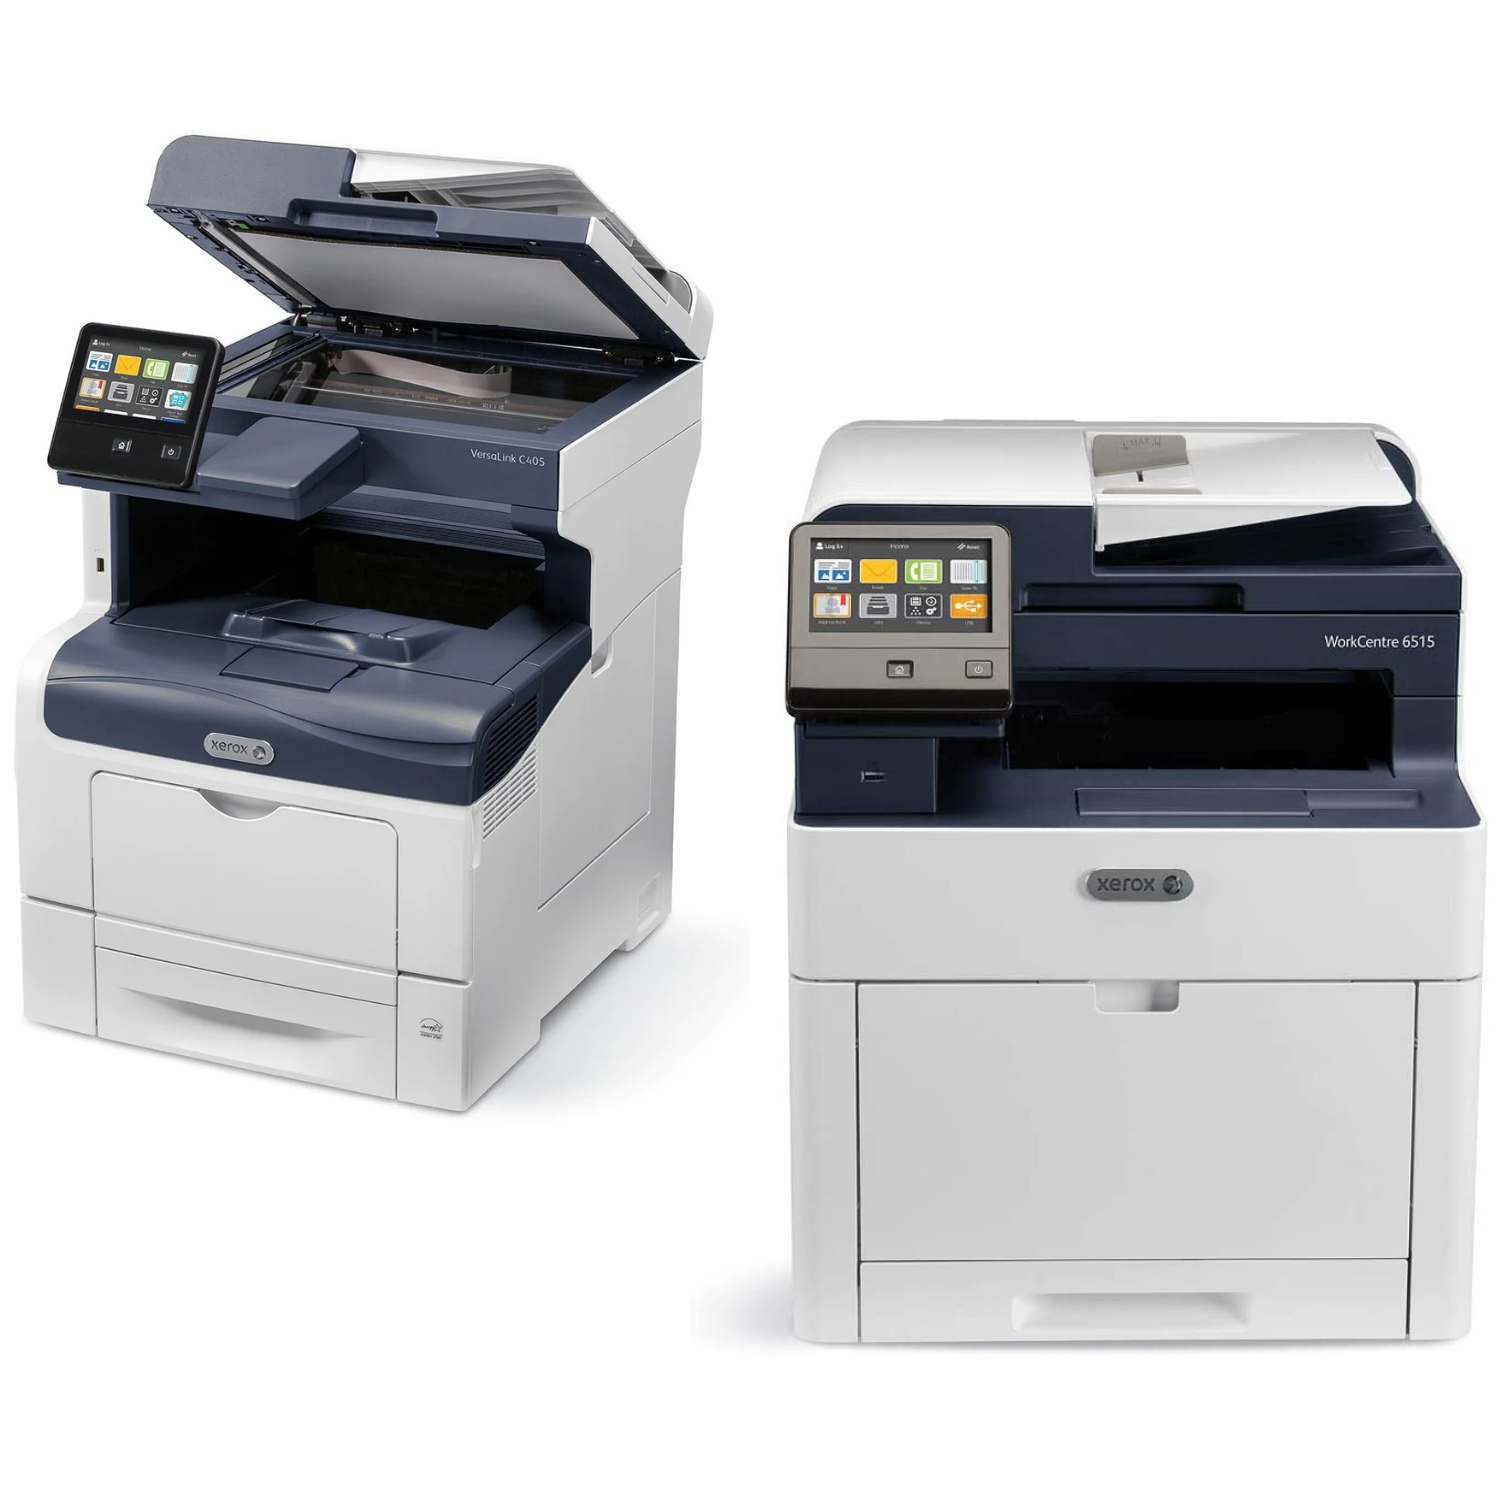 Print Resolution: The Xerox WorkCentre 6515DNI vs. Xerox Versalink C405DNM